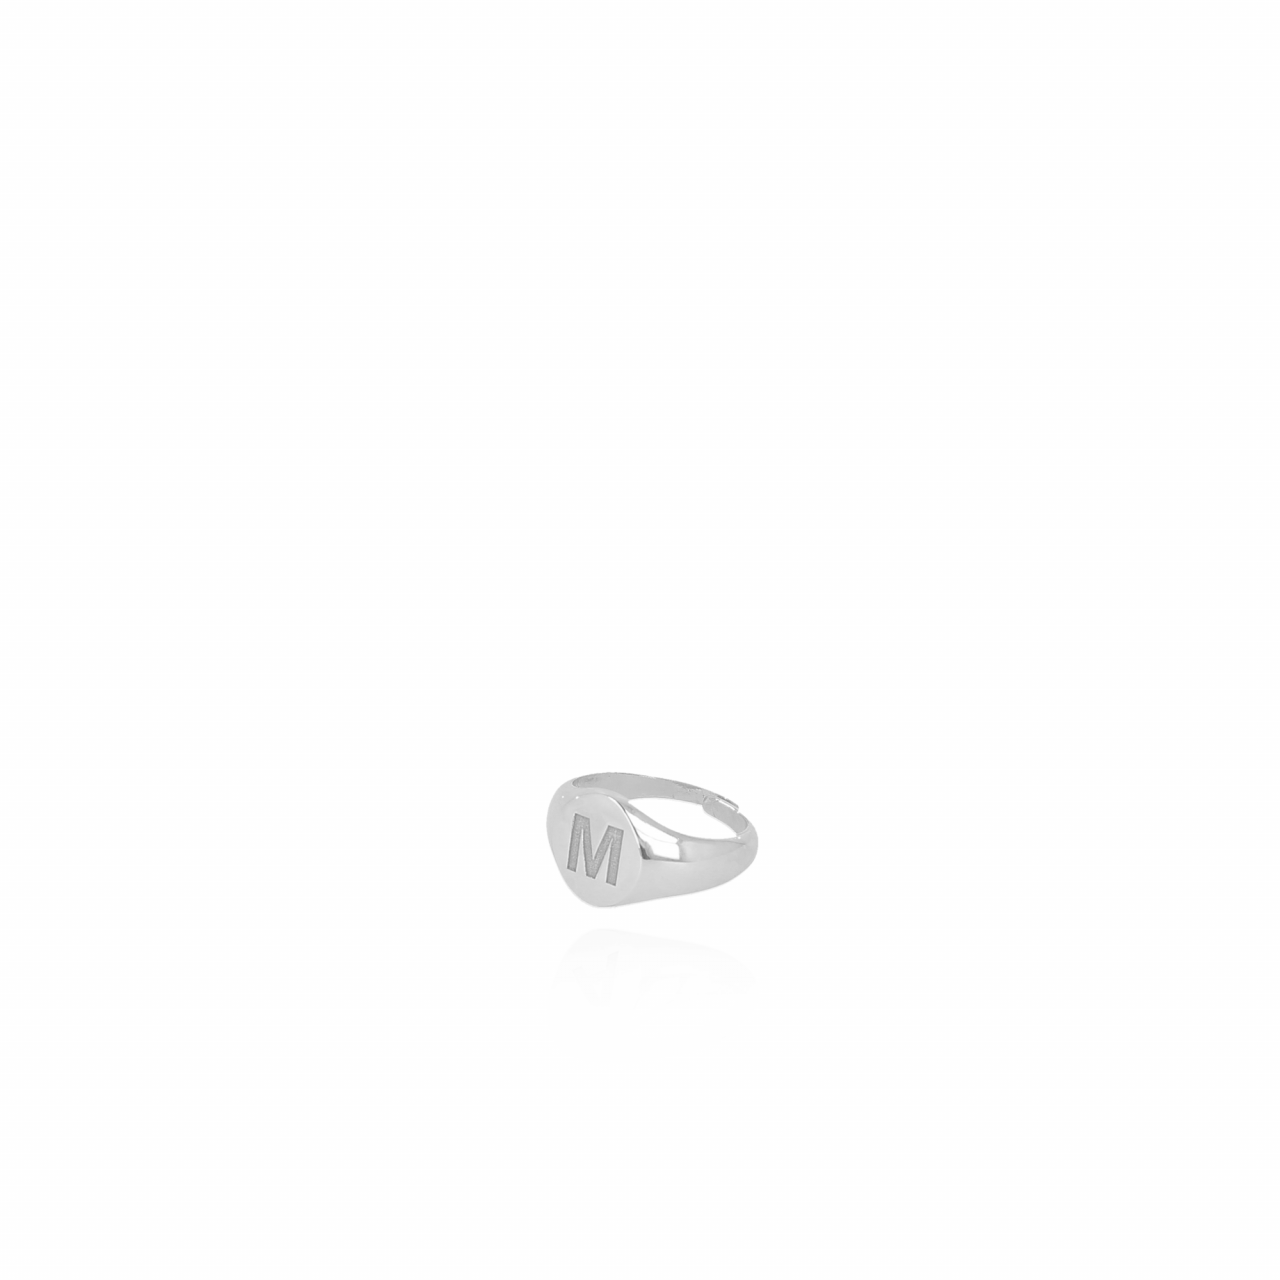 Zilveren Ring Initial Seallott-theme.productDescriptionPage.SEO.byTheBrand